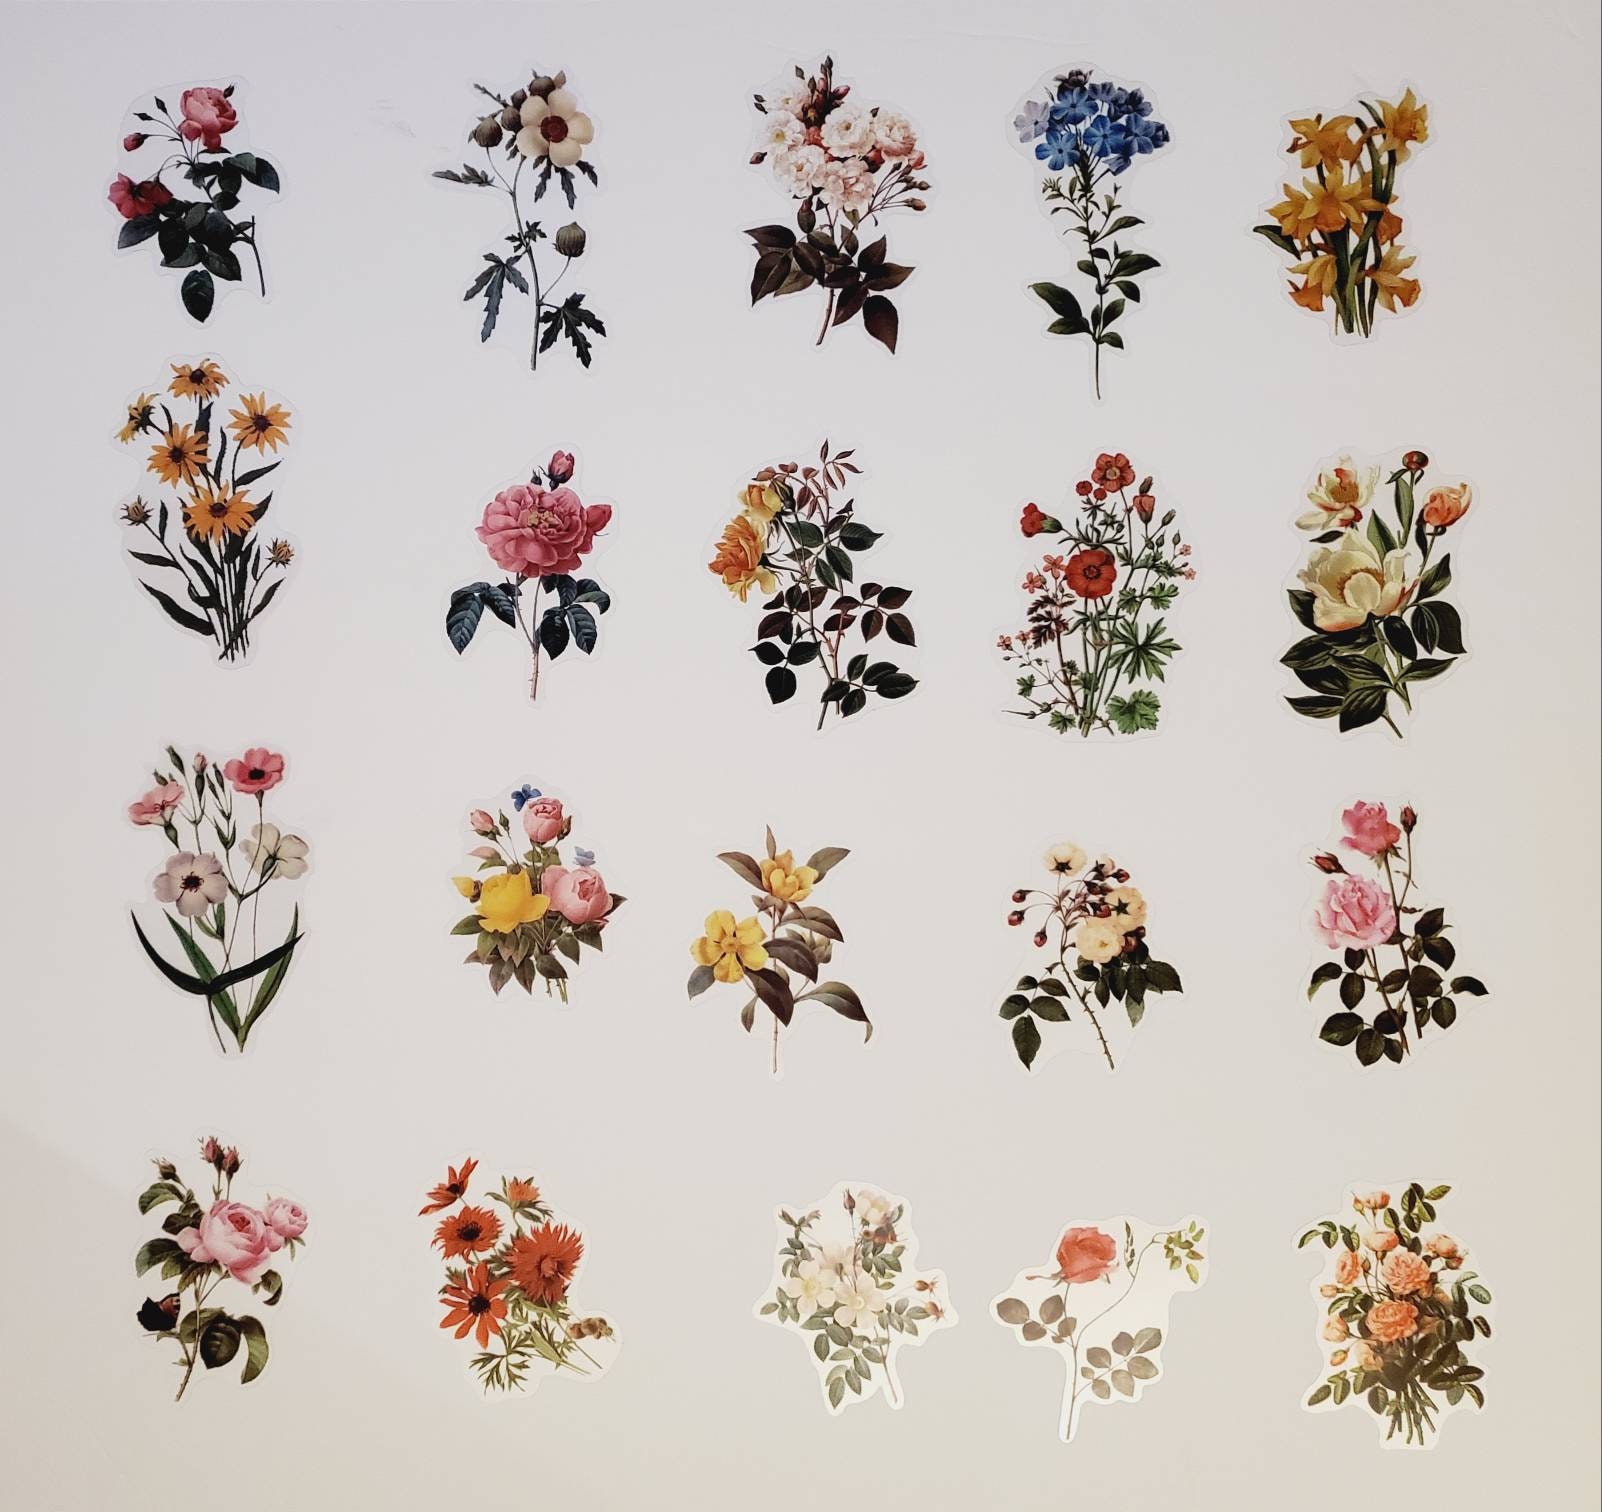 32 Pcs Flower Stickers, Transparent flower stickers, flower